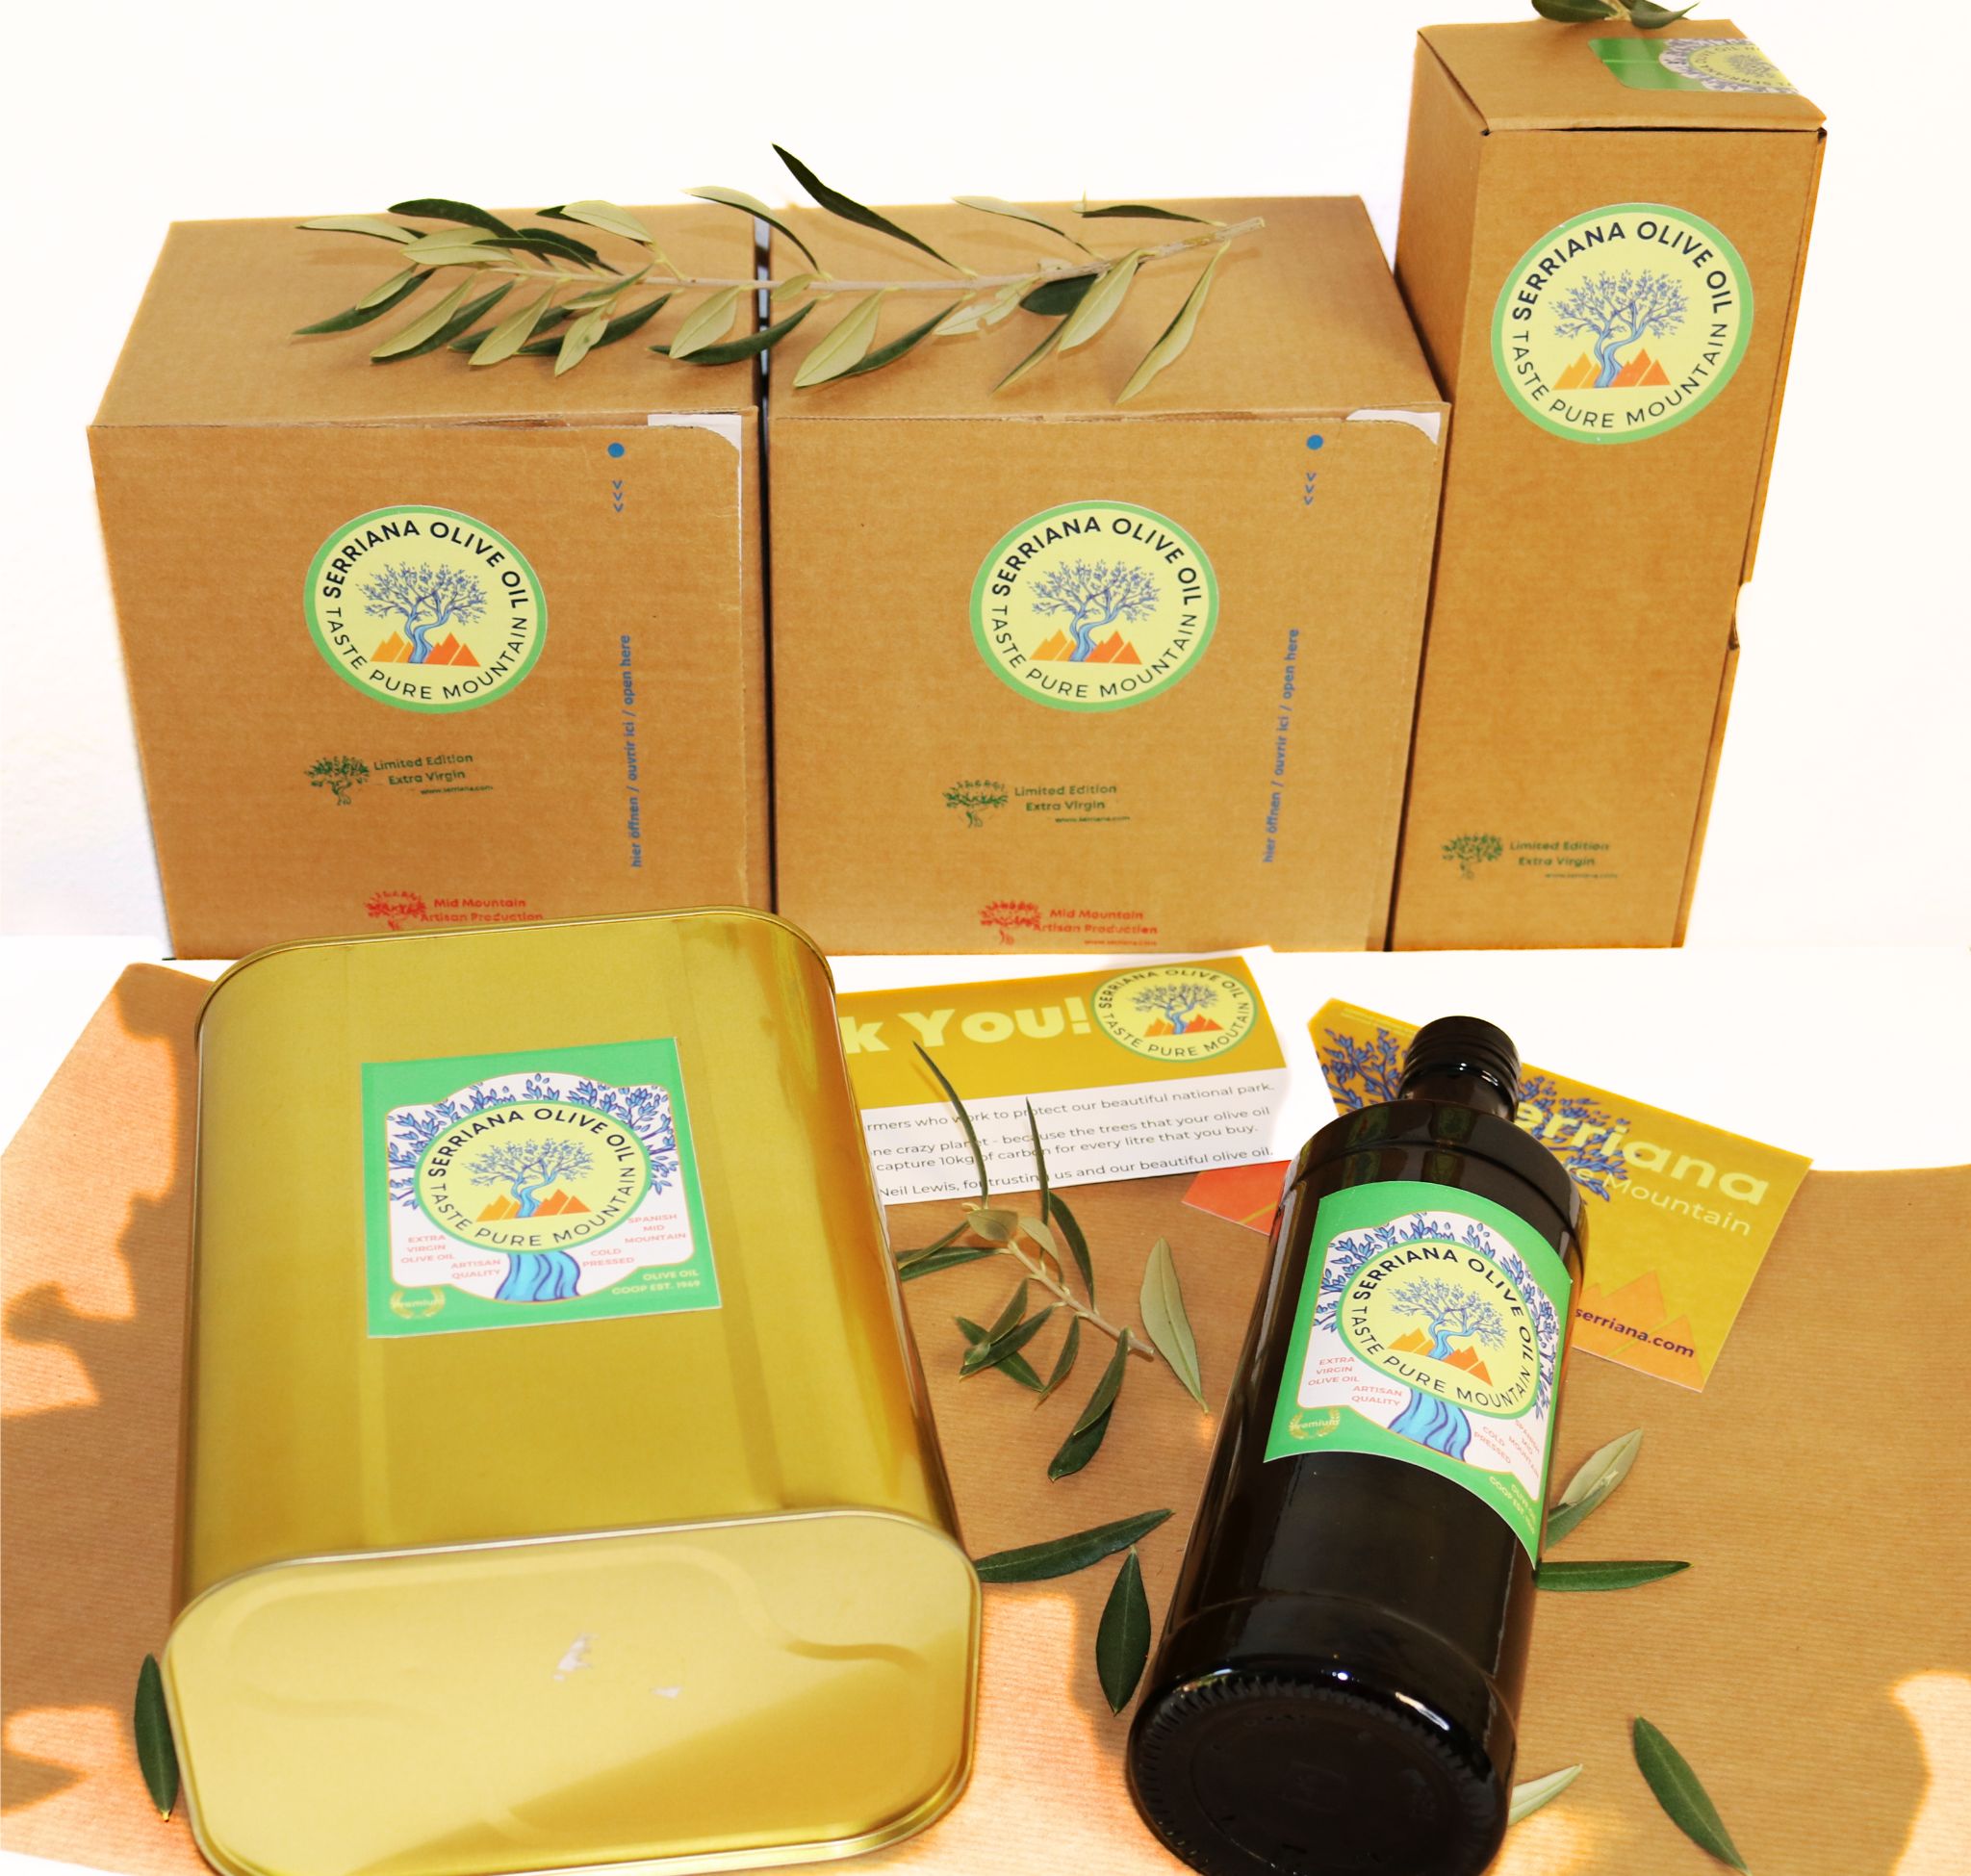 Serriana olive oil gift boxes